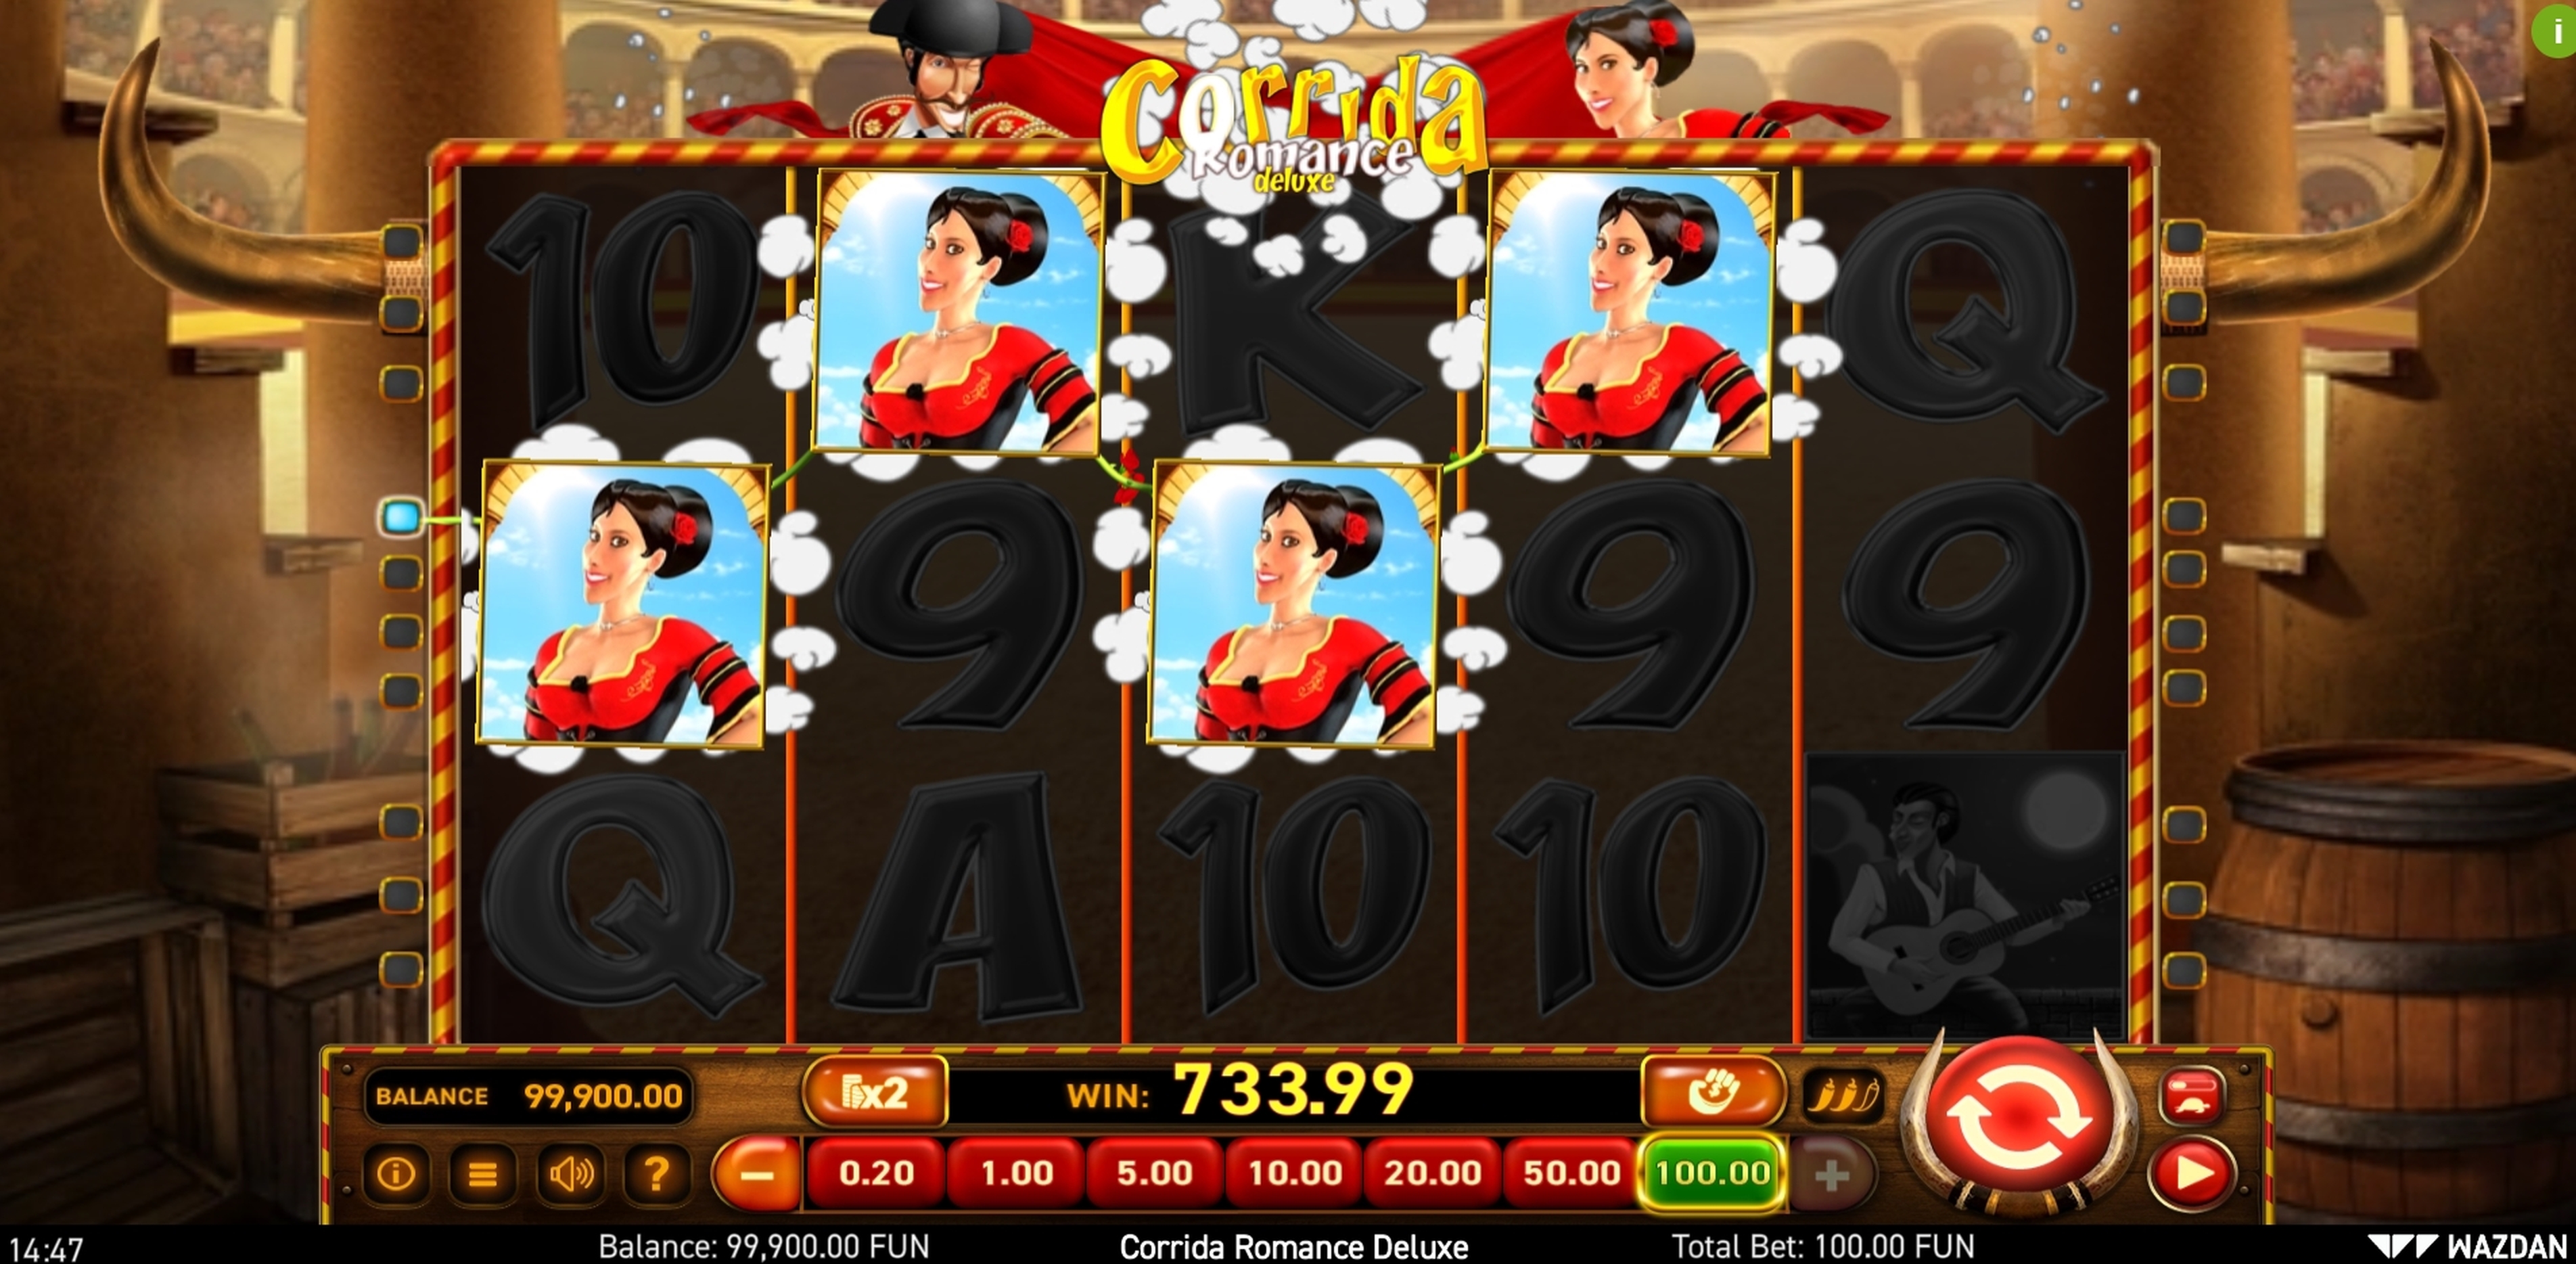 Win Money in Corrida Romance Deluxe Free Slot Game by Wazdan